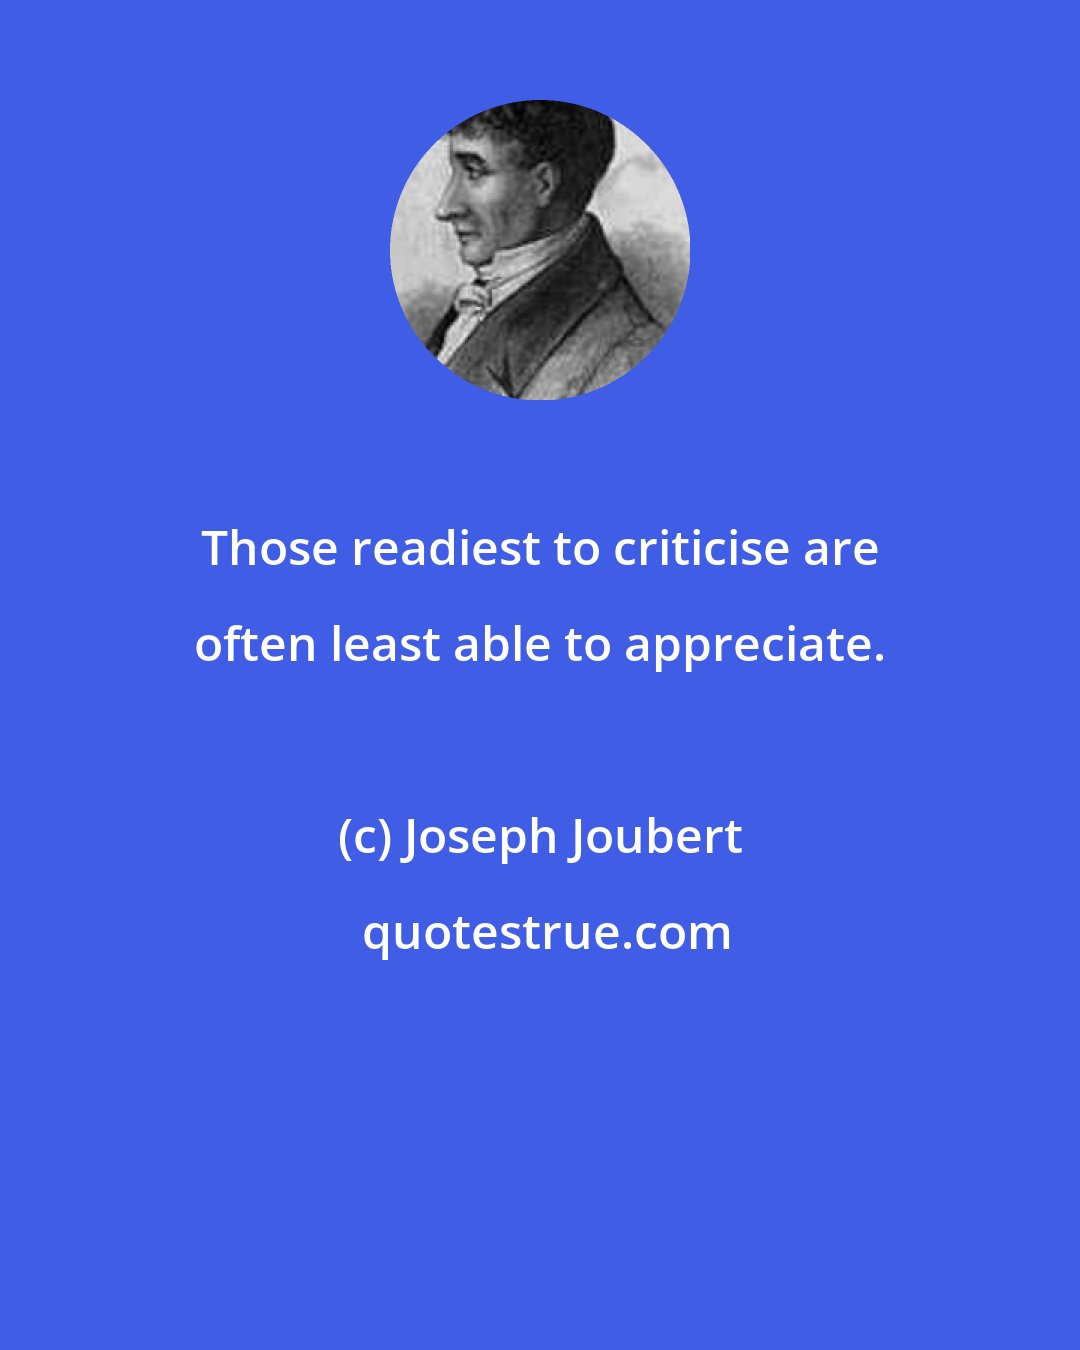 Joseph Joubert: Those readiest to criticise are often least able to appreciate.